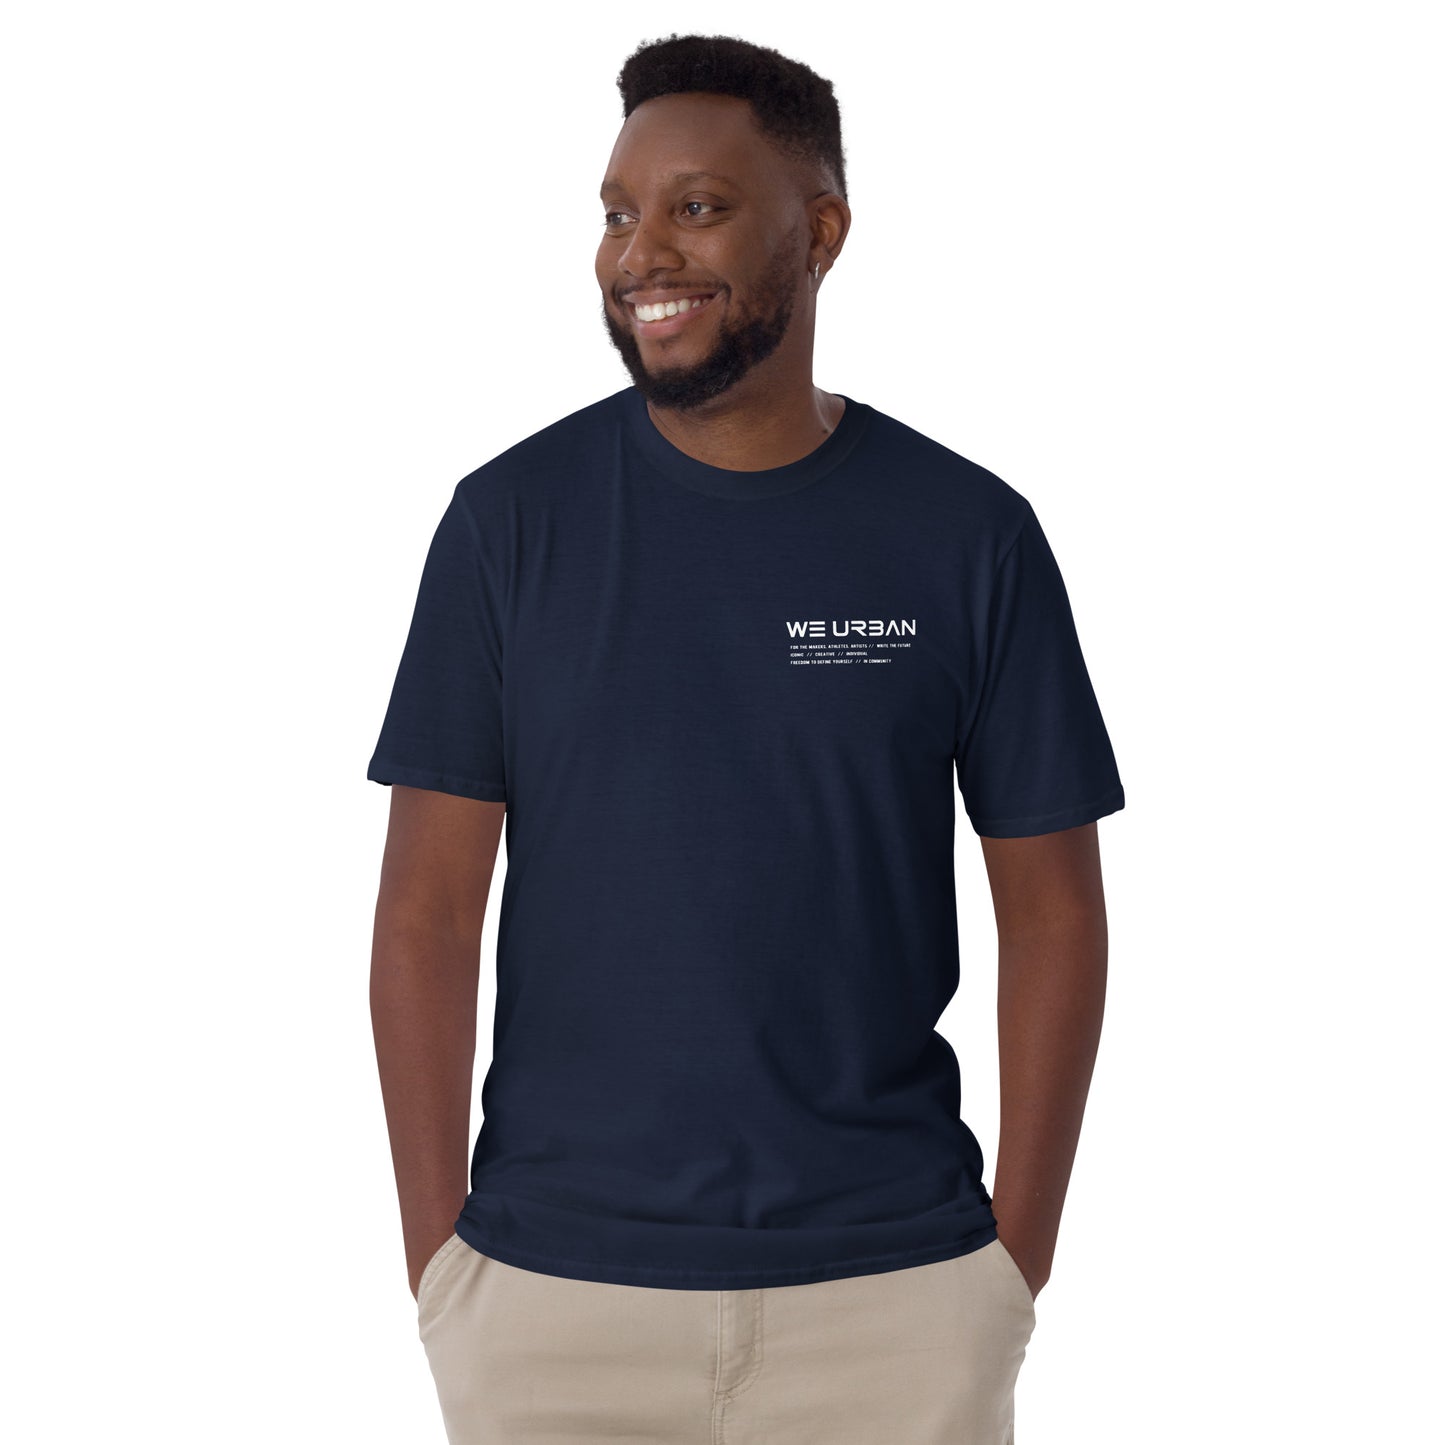 Renaissance Man Short-Sleeve Unisex T-Shirt